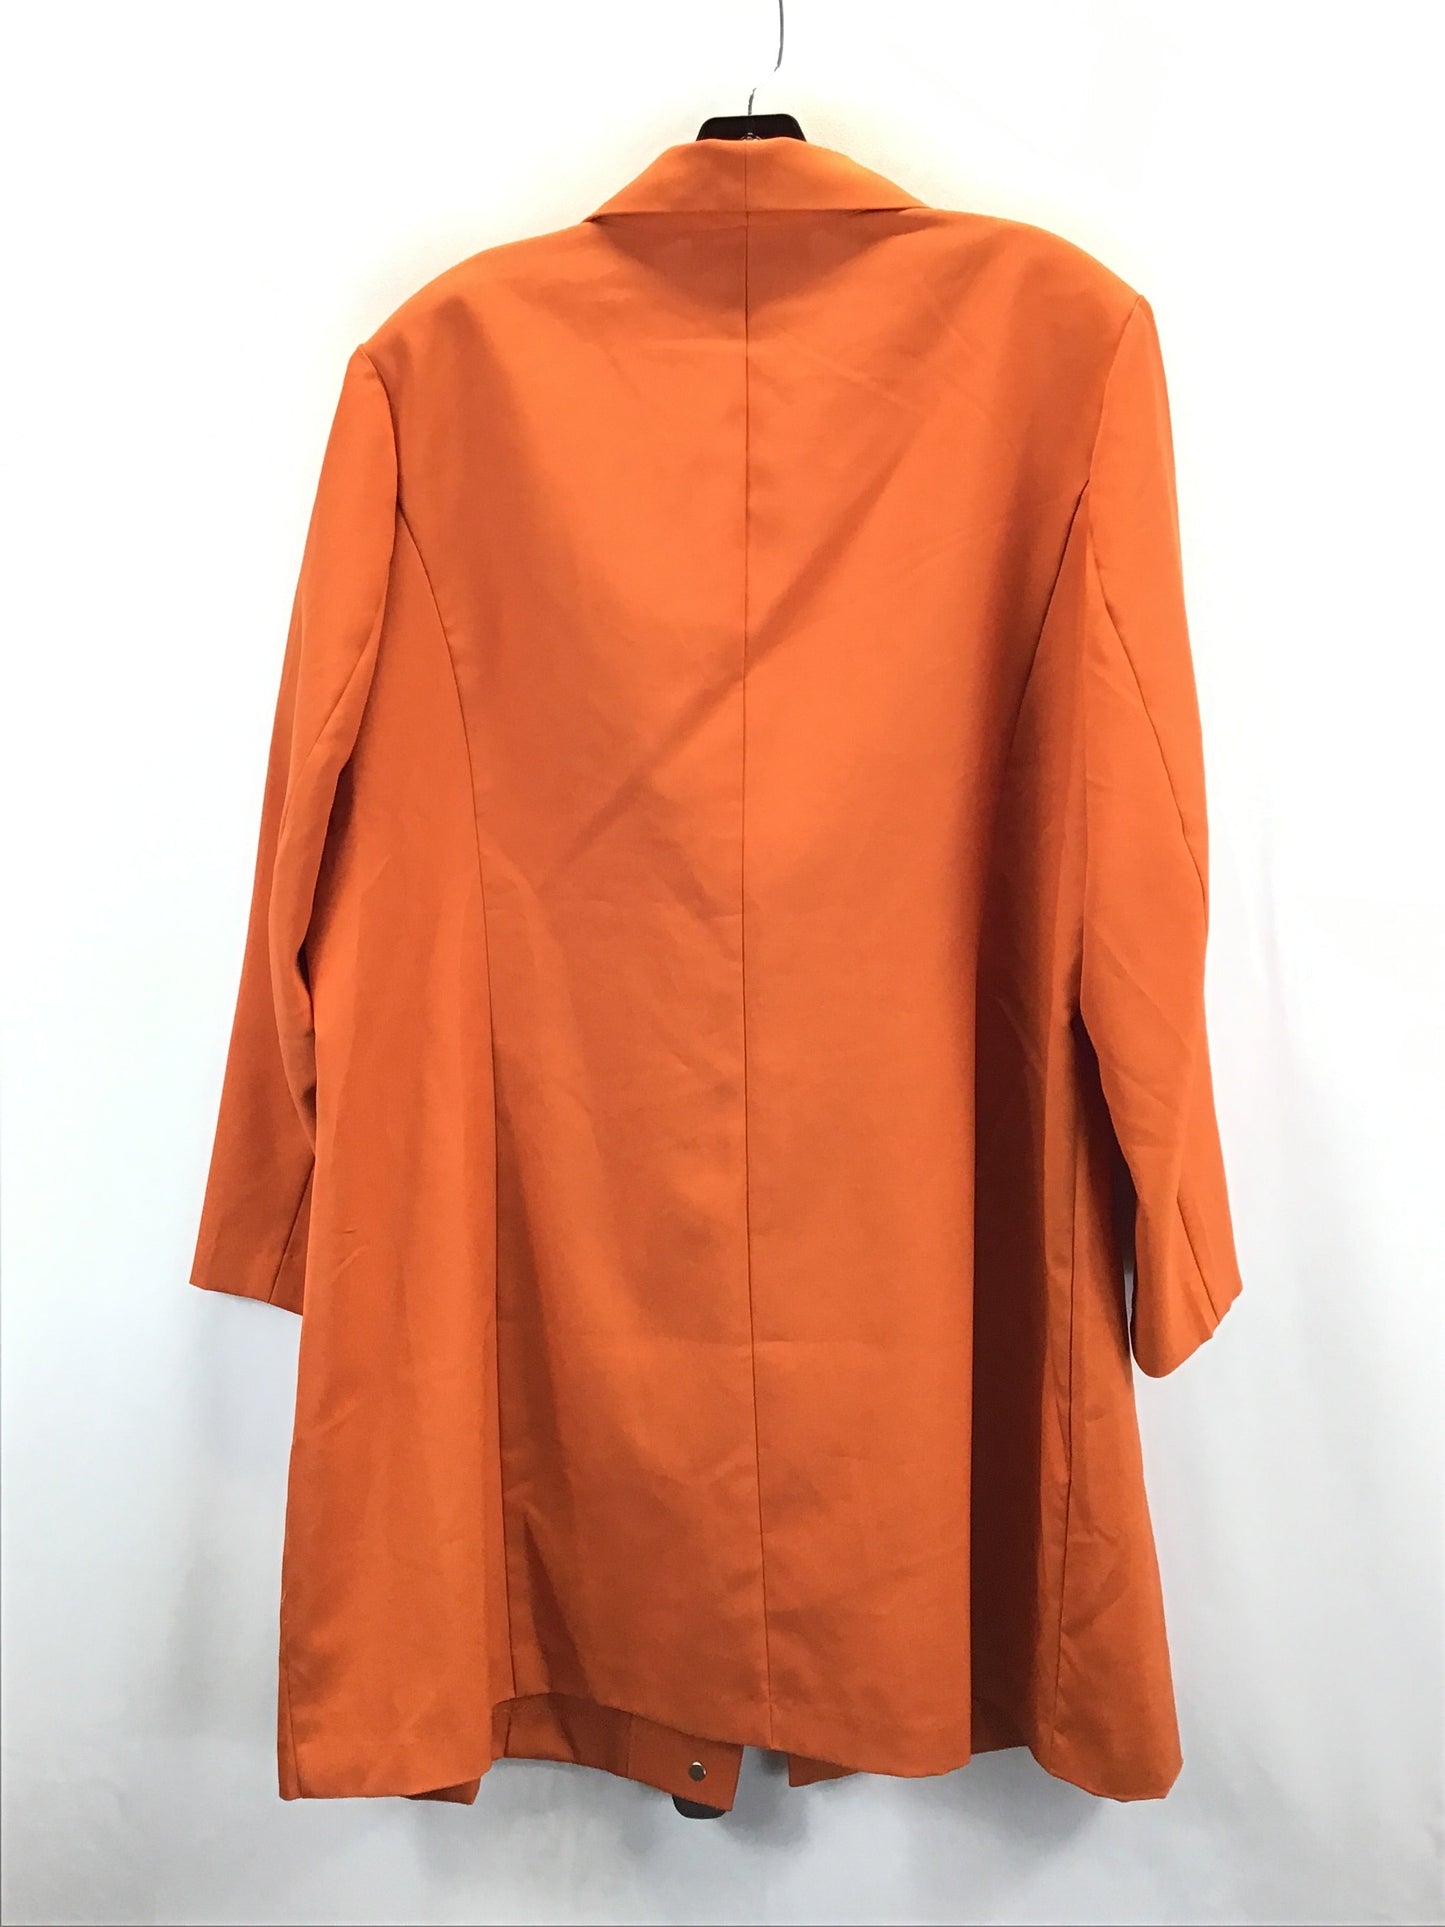 Orange Blazer Clothes Mentor, Size 22